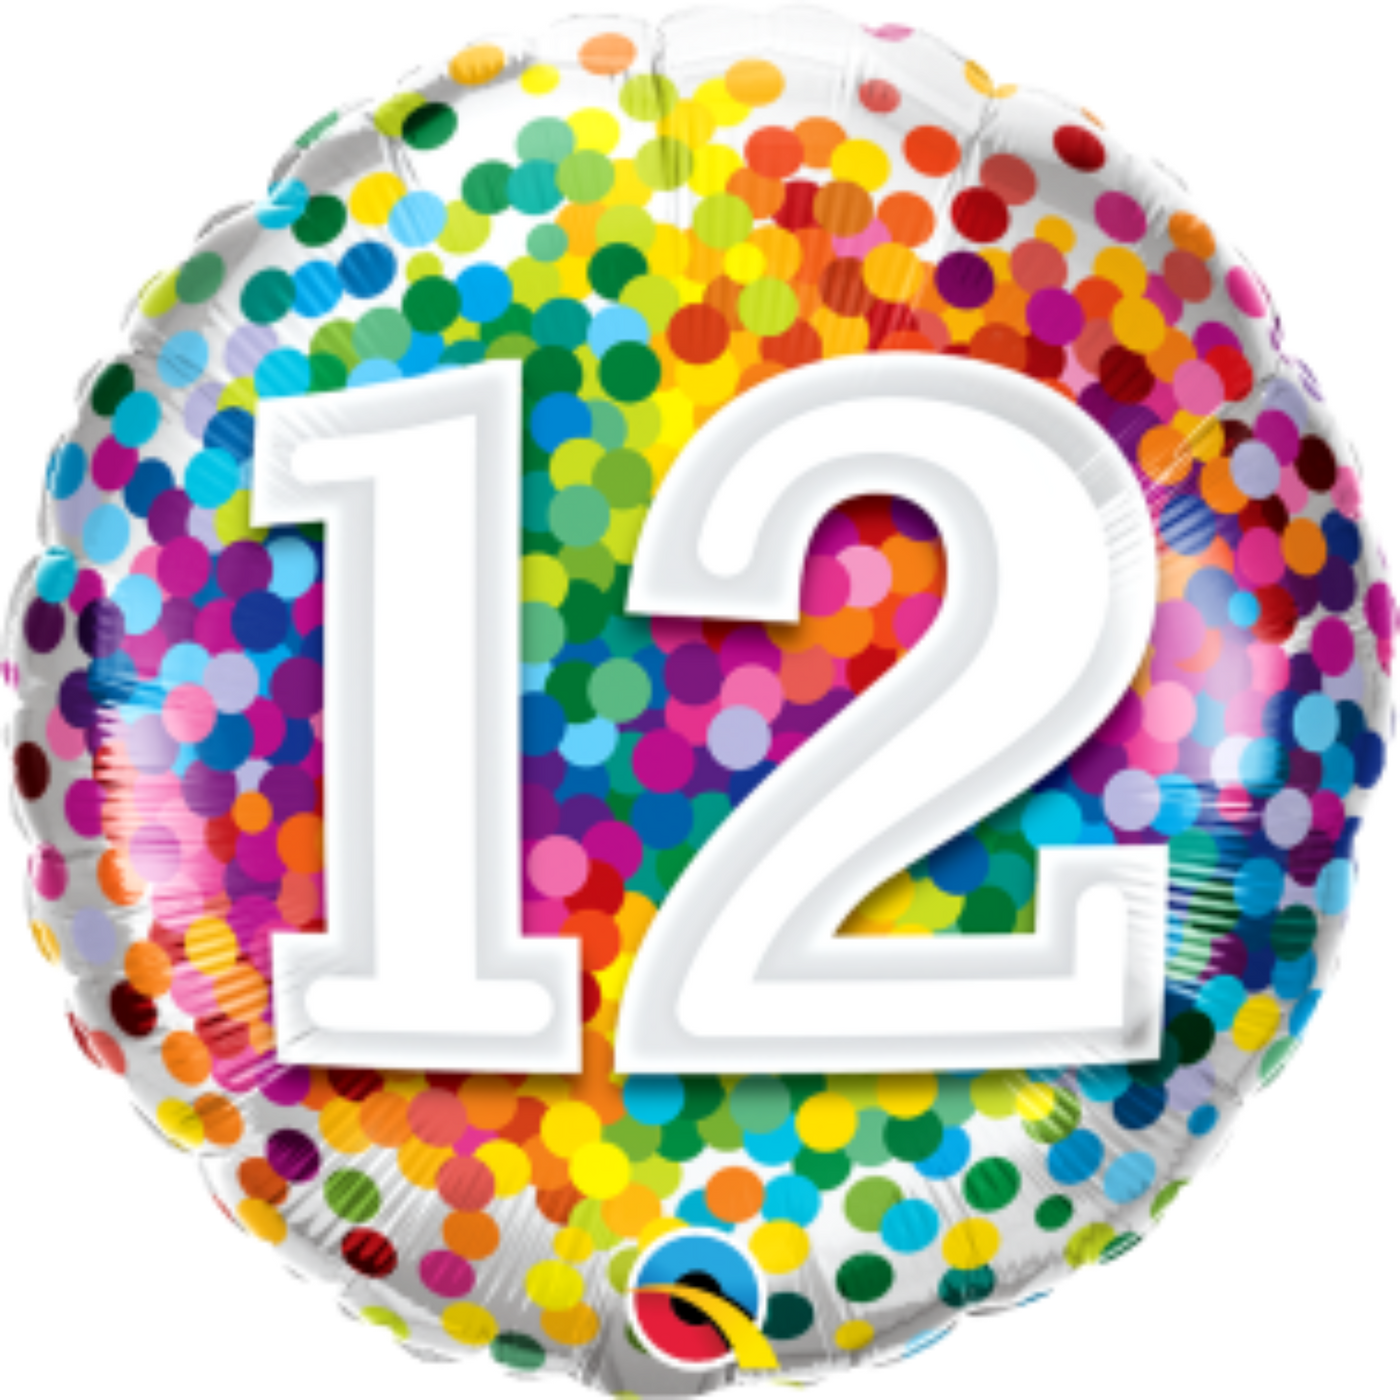 Rainbow Confetti Age 12 Birthday Balloon